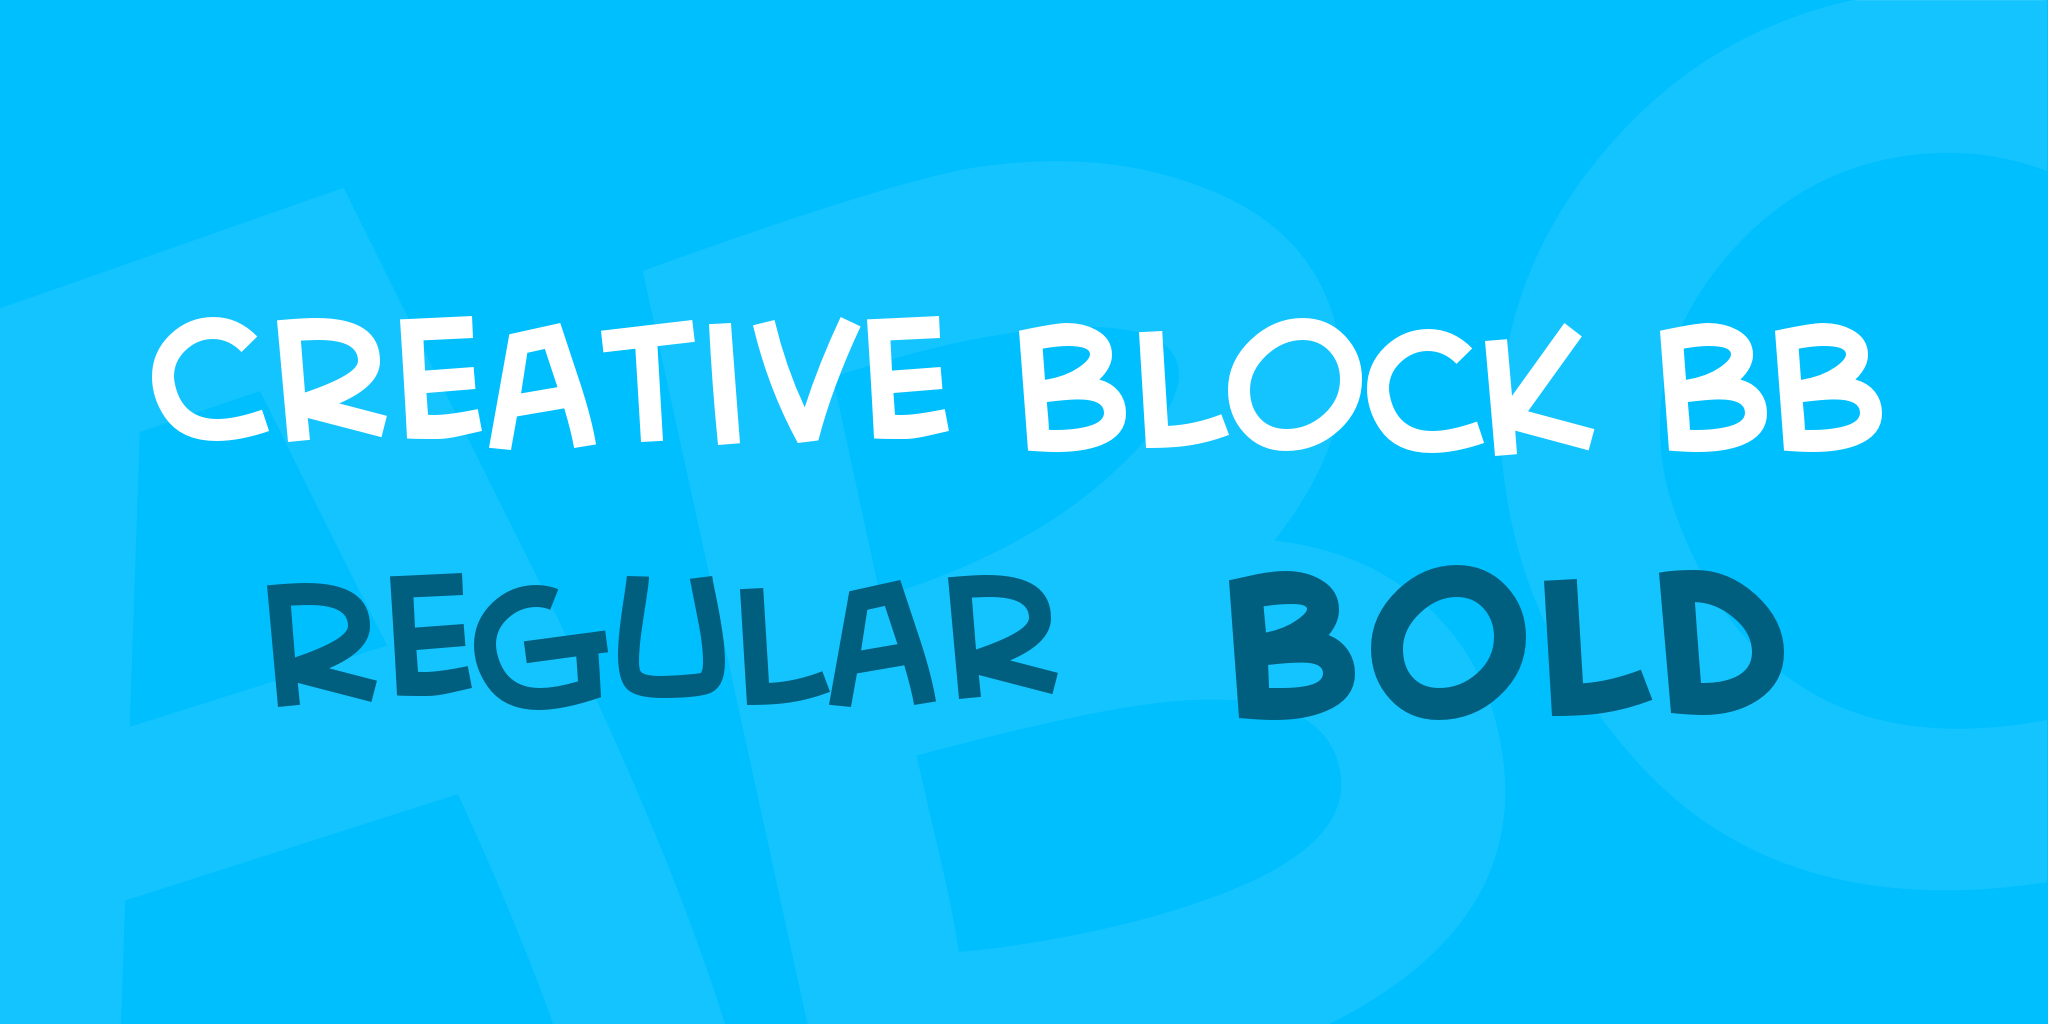 Creative Block Bb